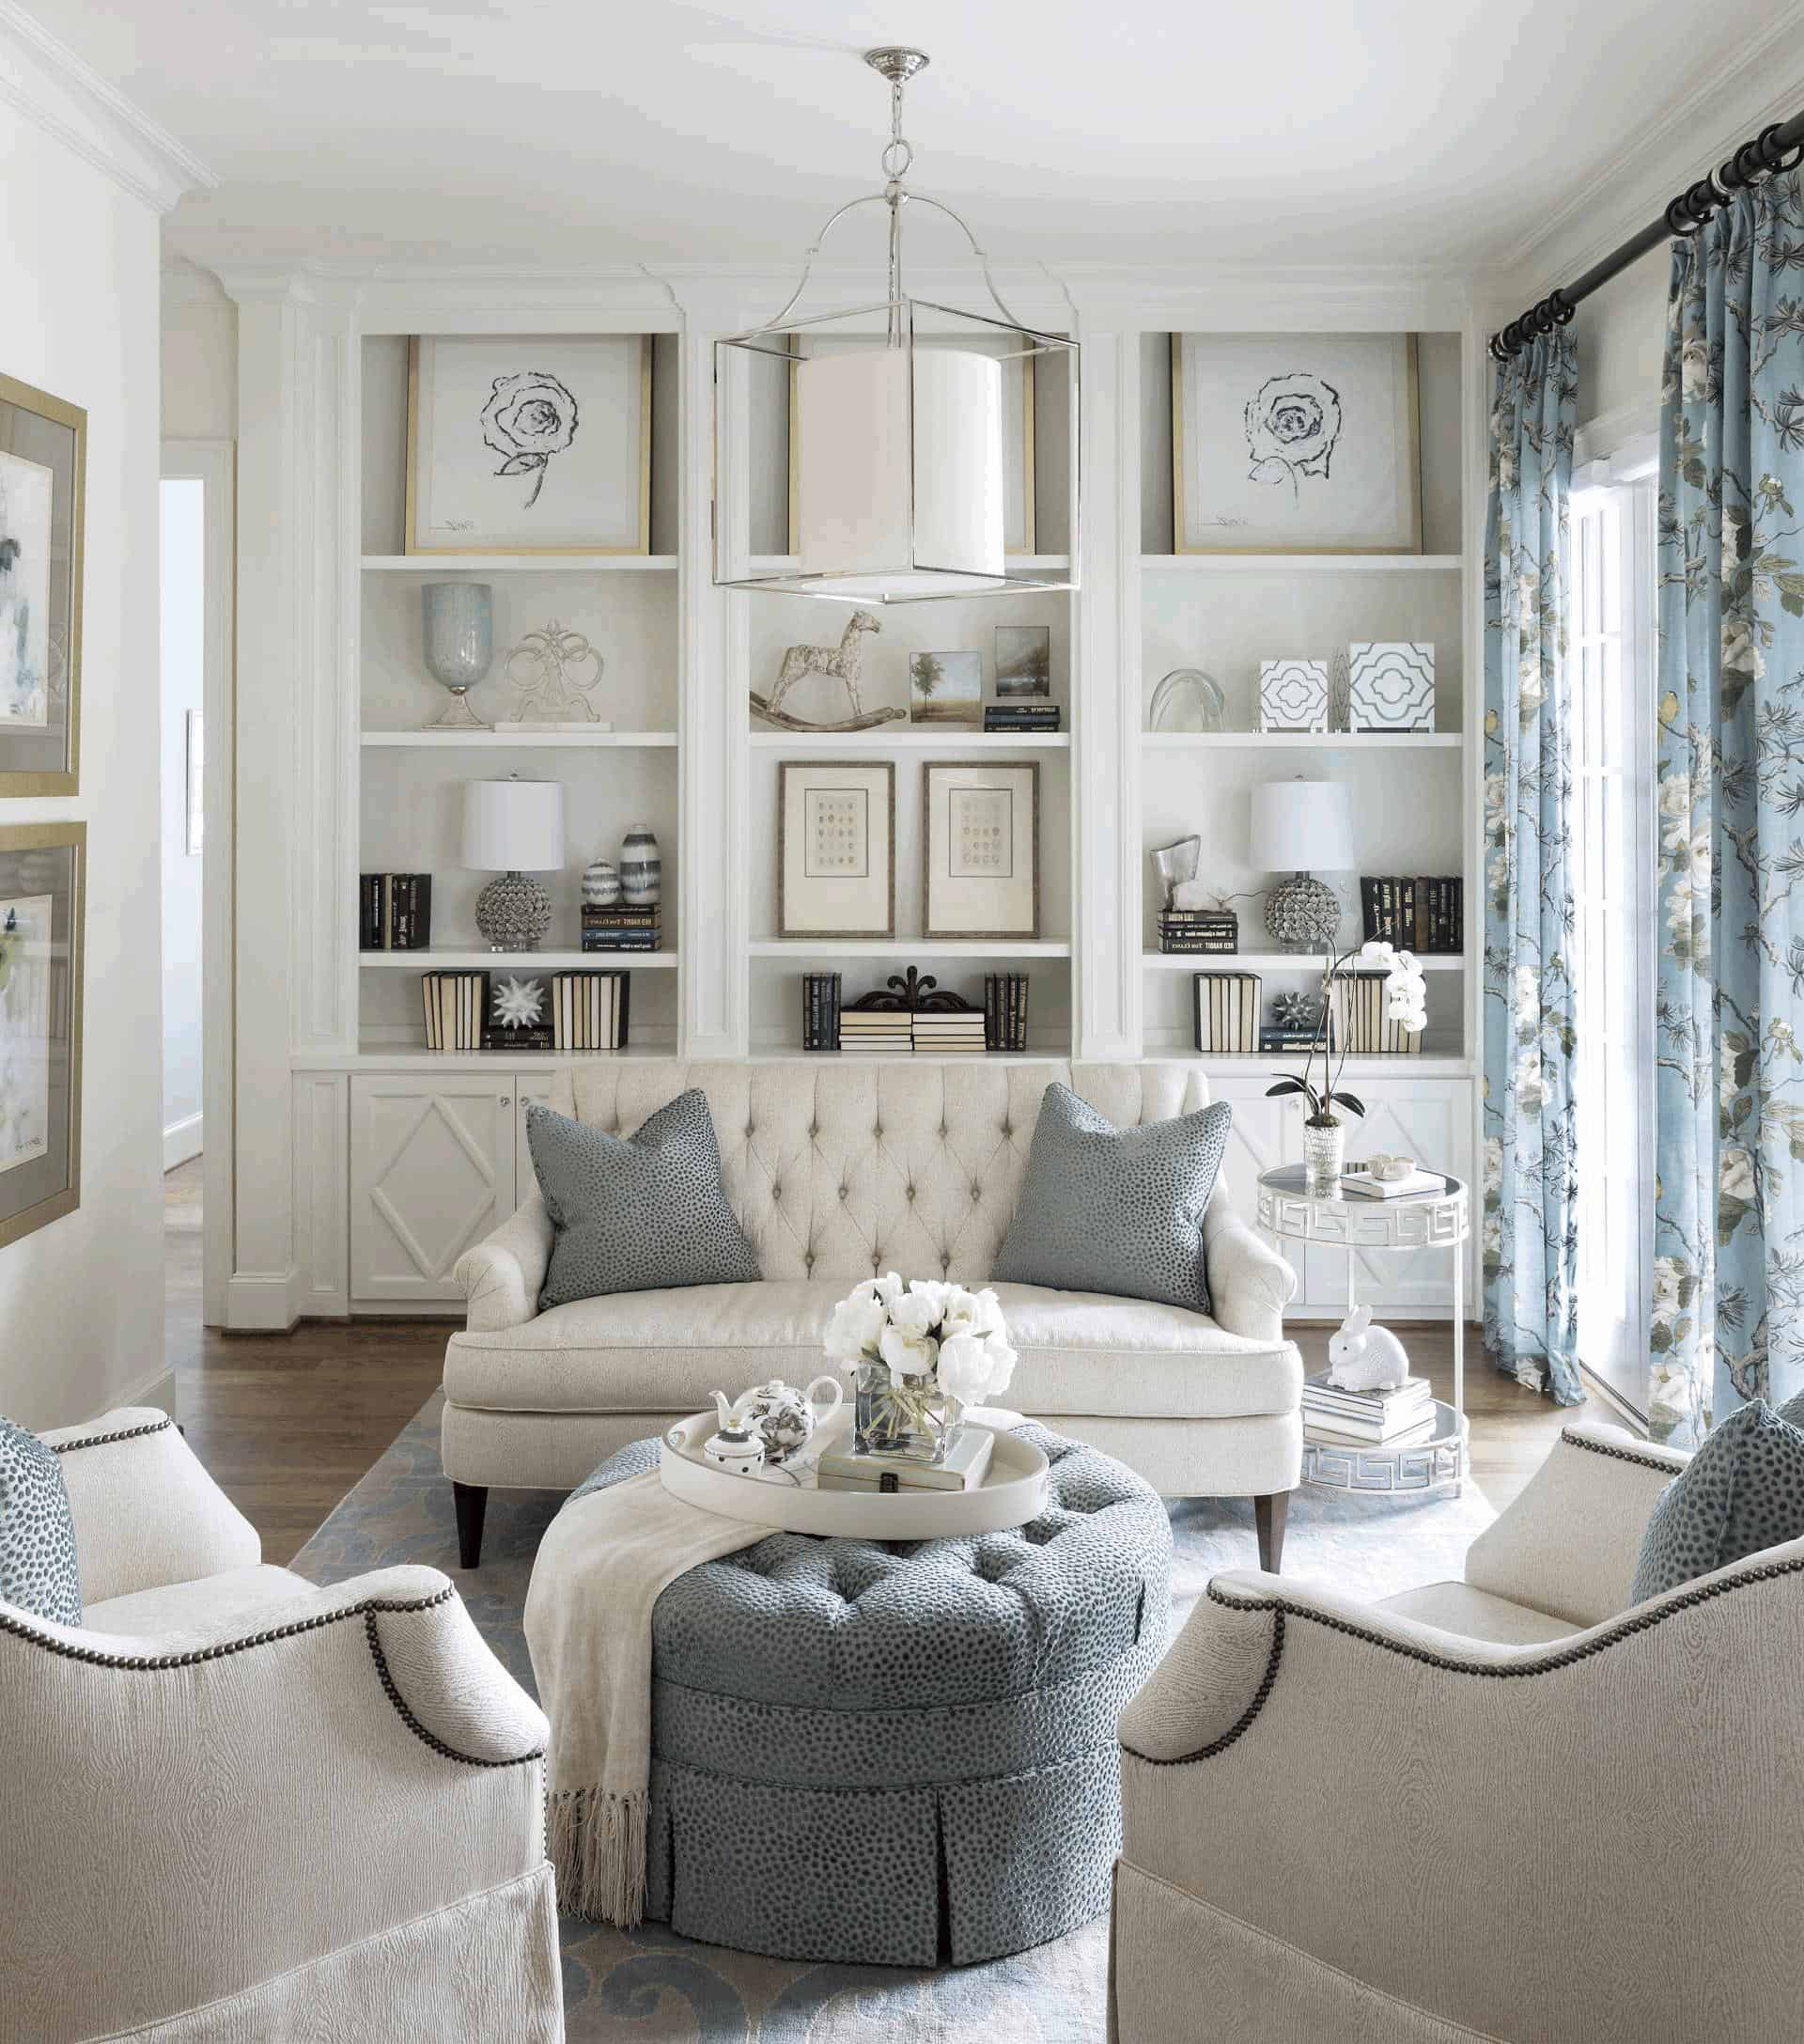 White living room furniture – a stylish option